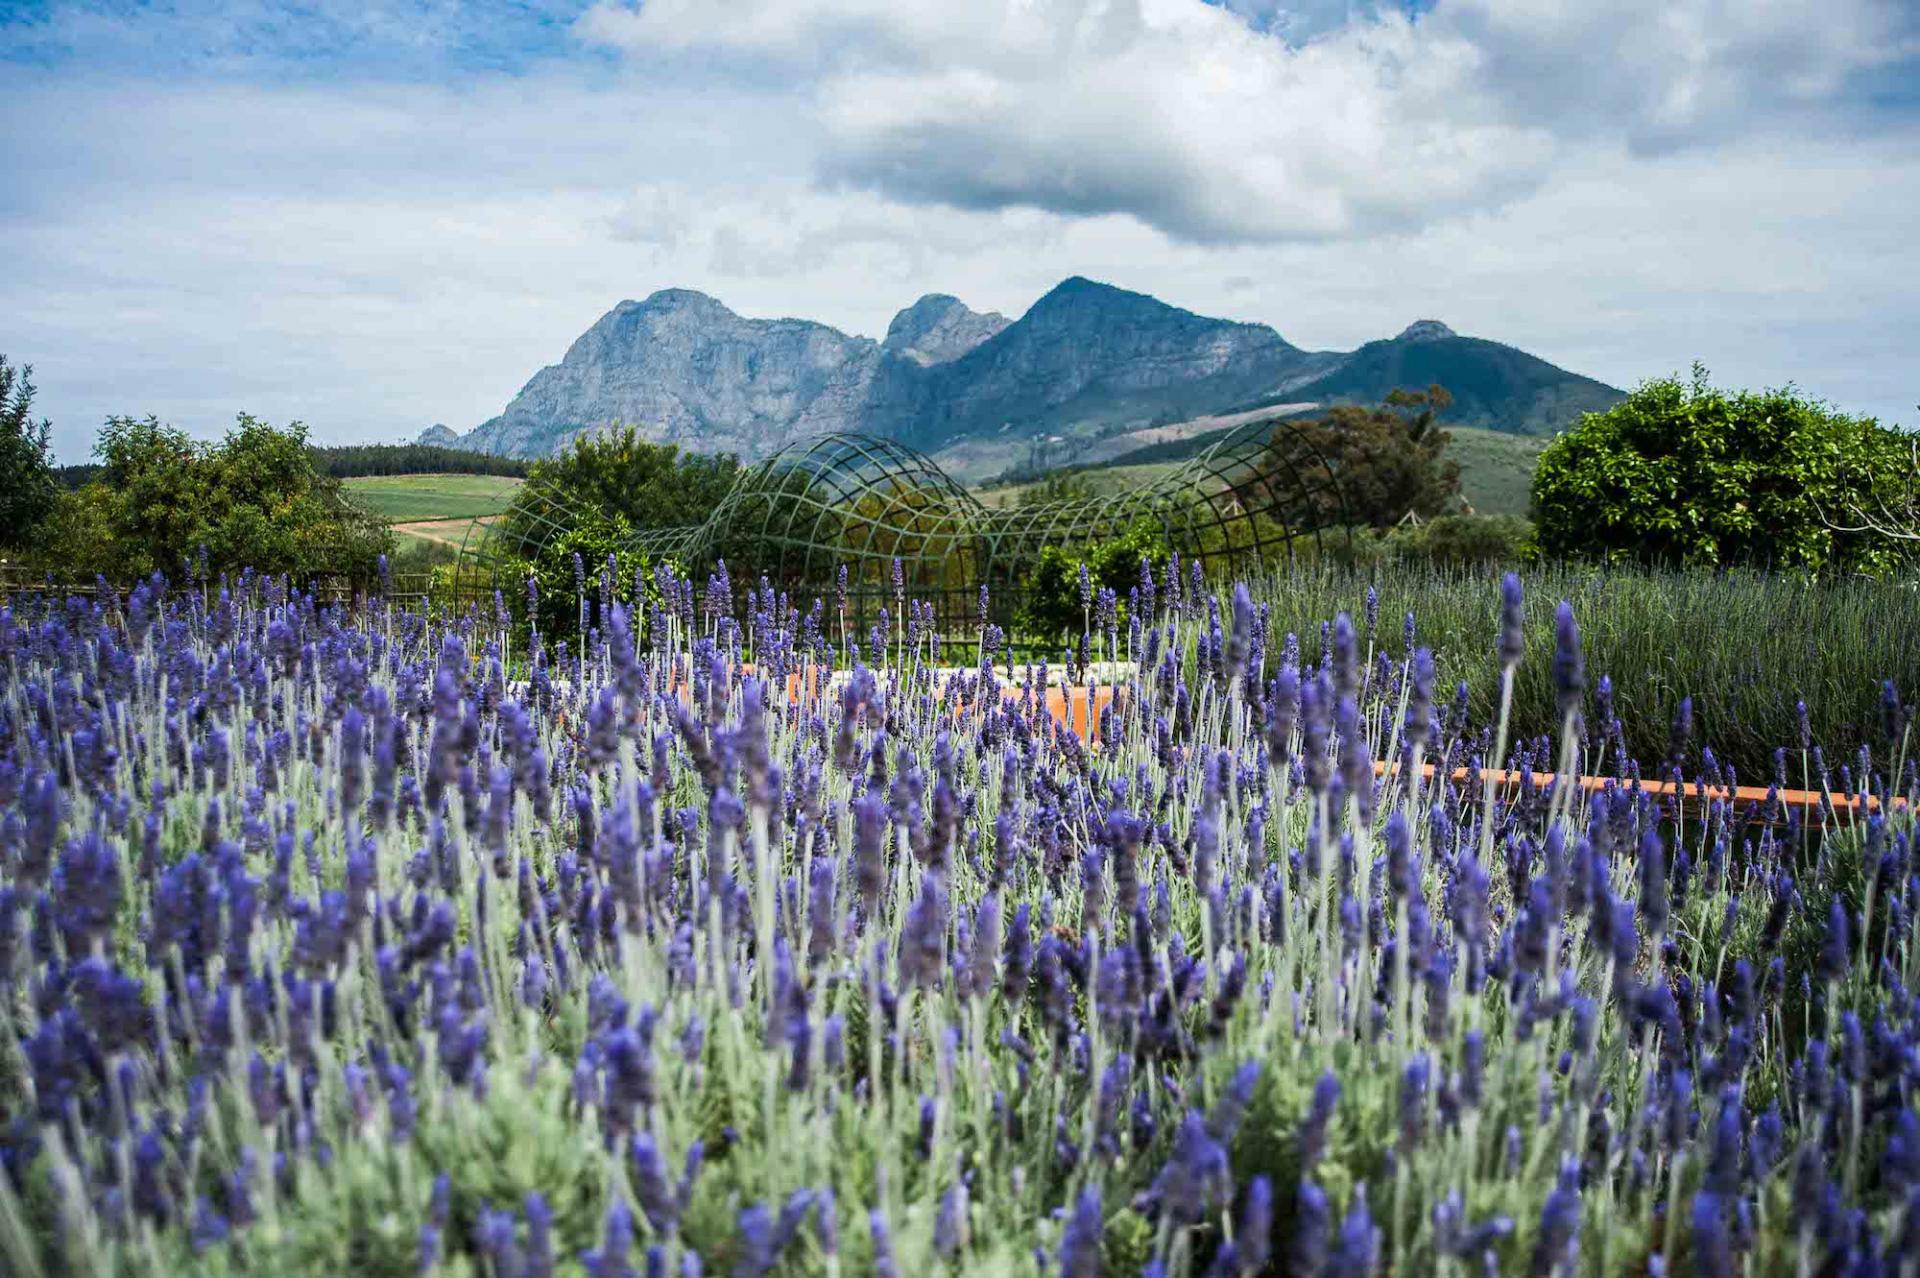 The Babylonstoren Garden in South Africa Is A True Delight For The Senses